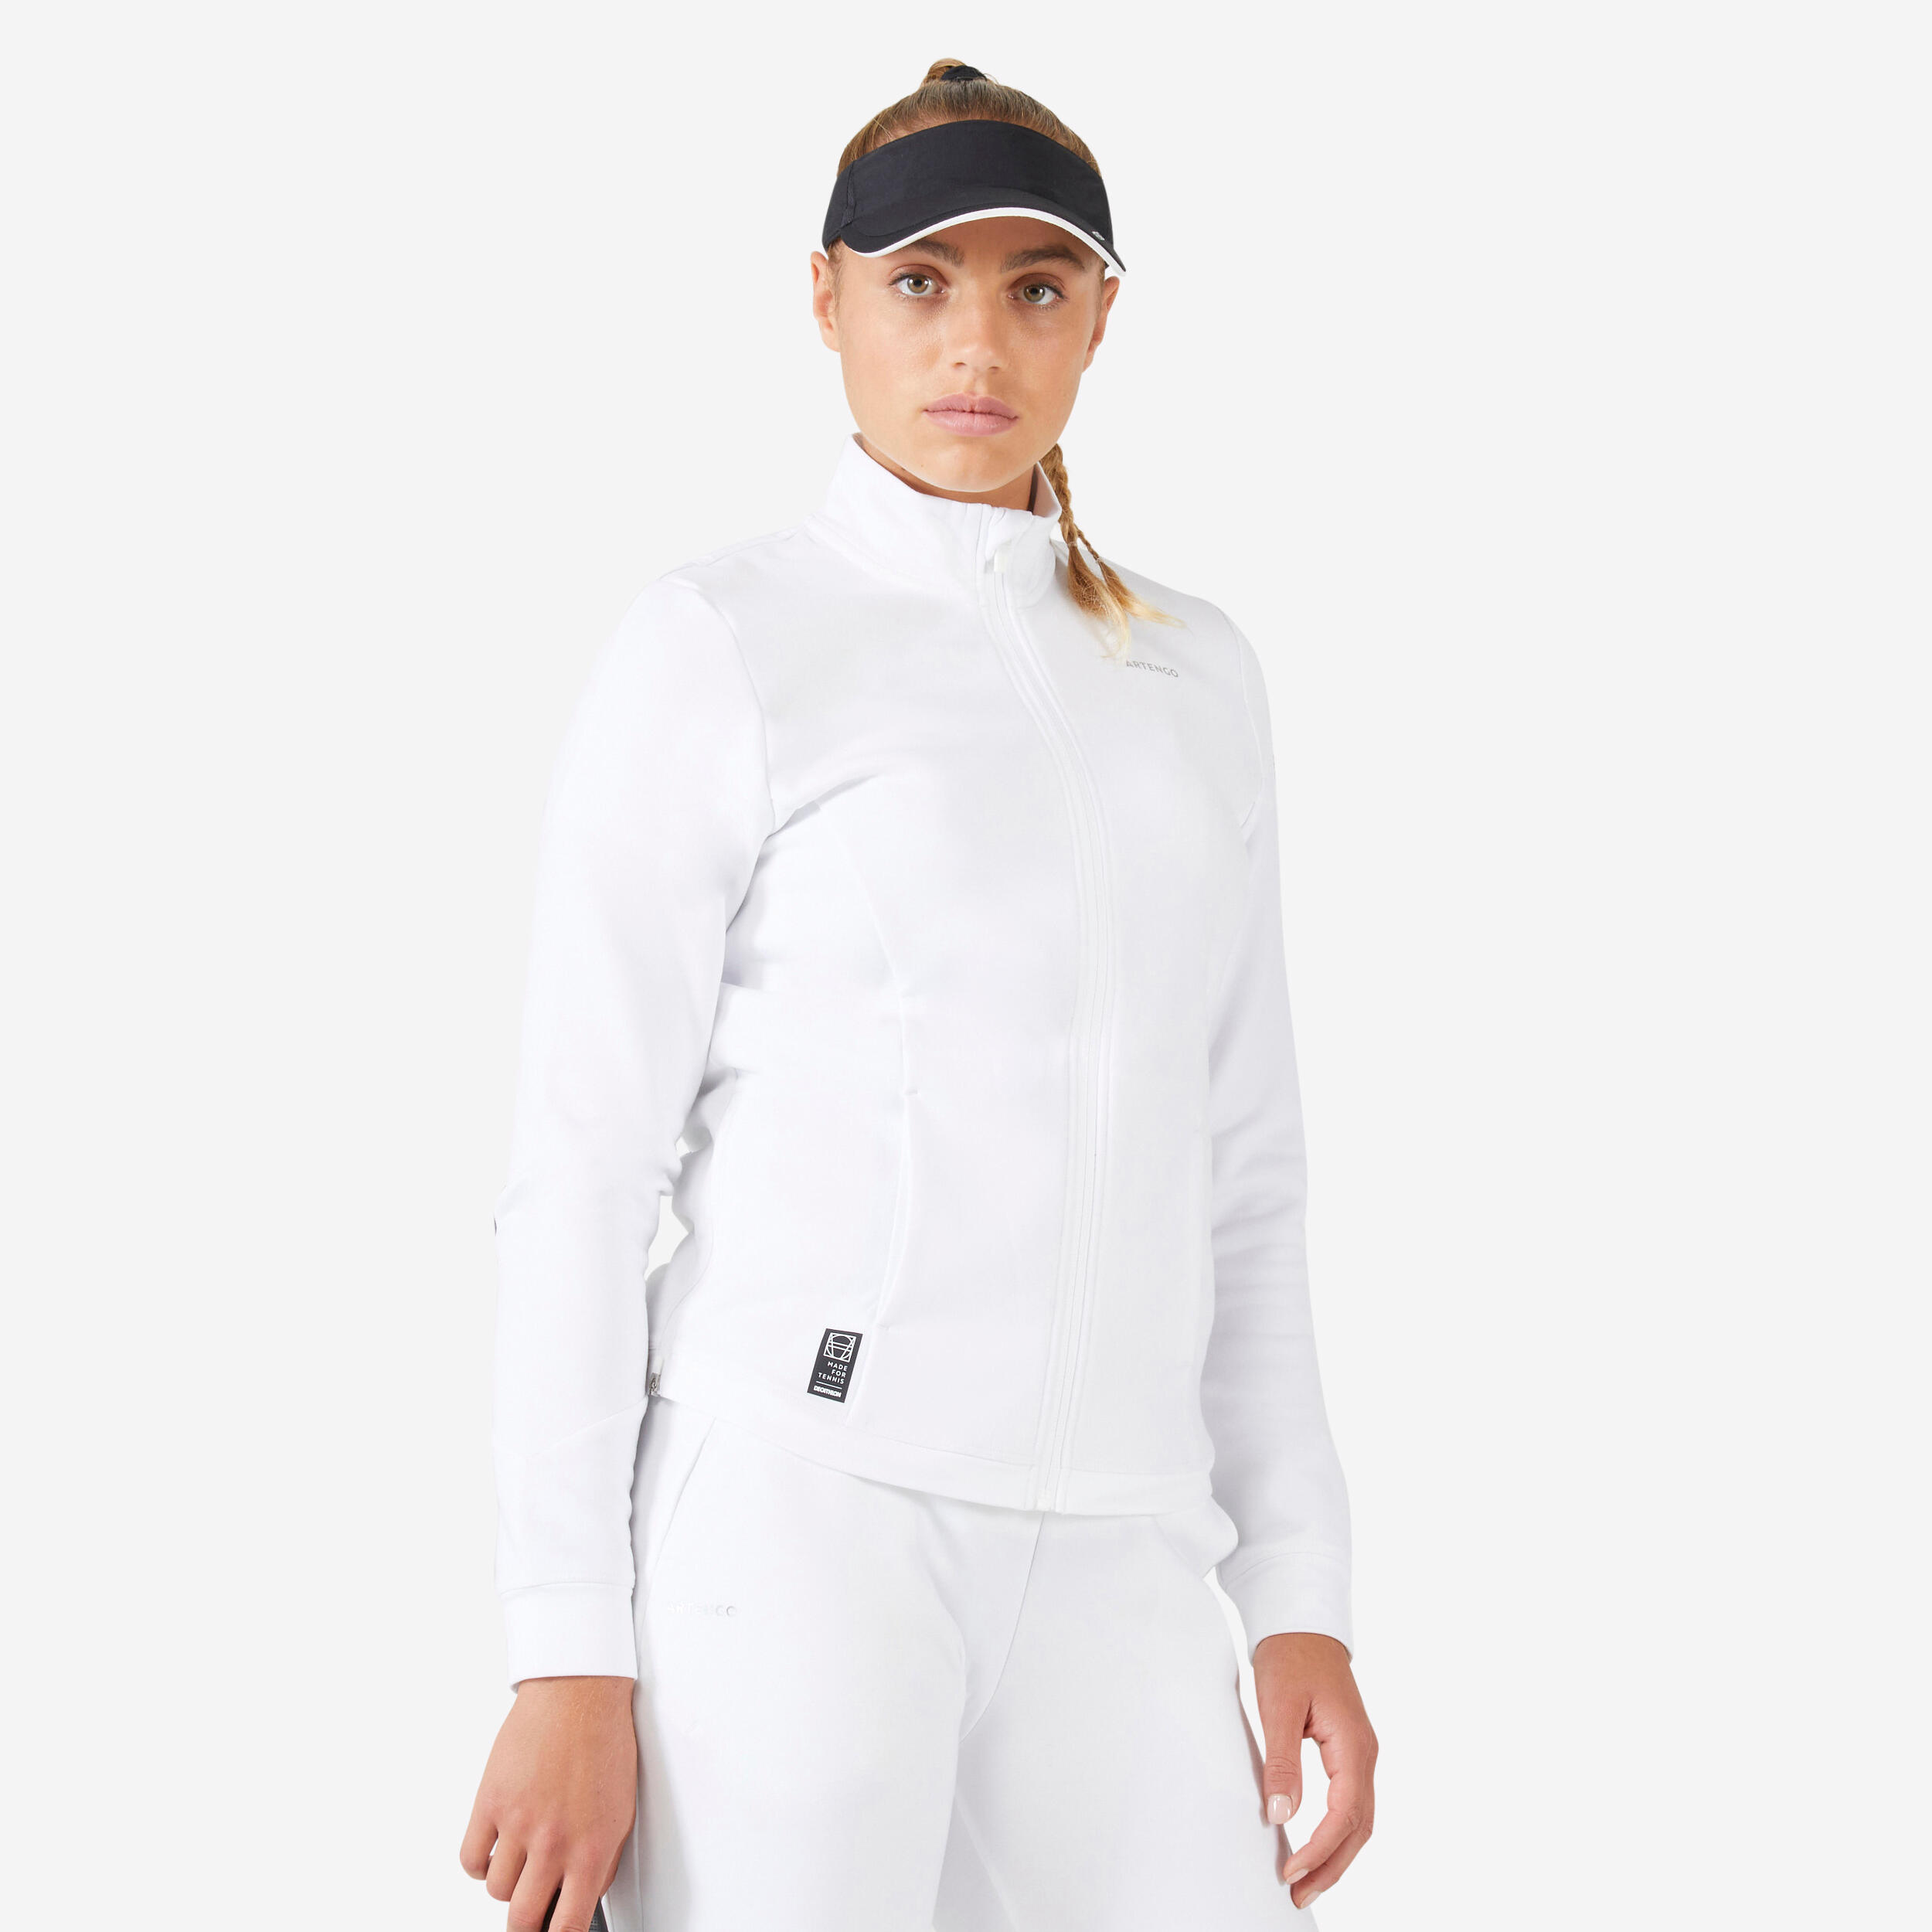 ARTENGO Women's Tennis Quick-Dry Soft Jacket Dry 900 - White